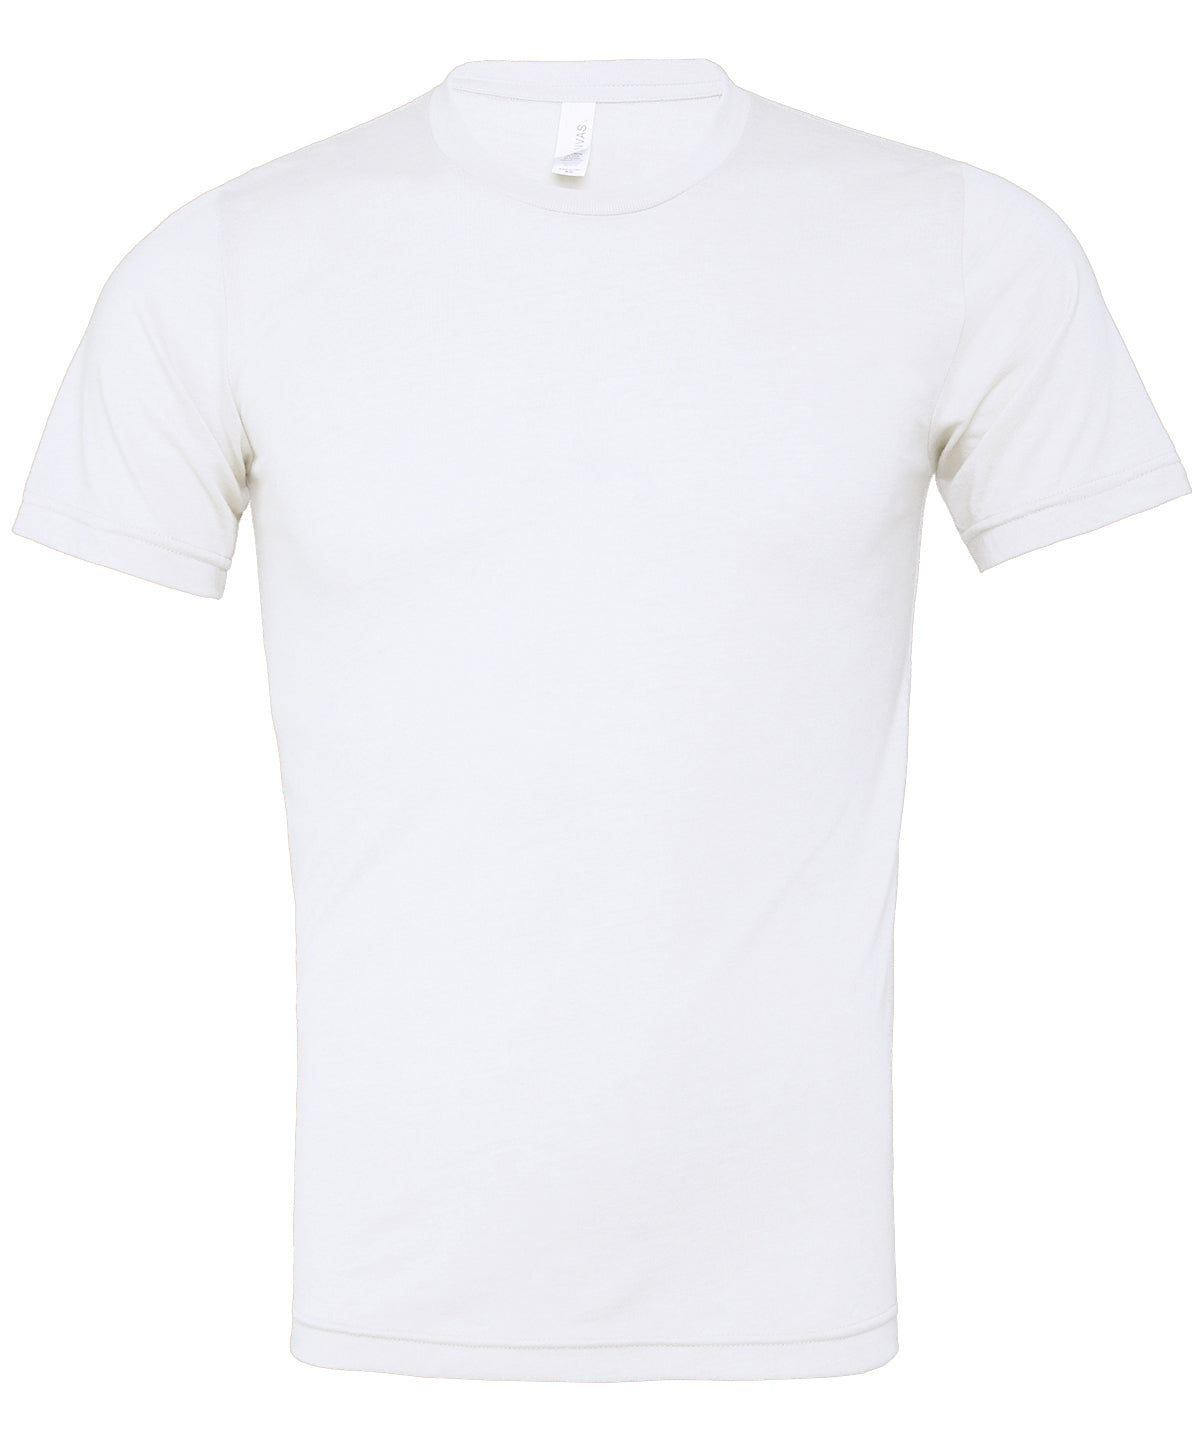 Bella Canvas Unisex triblend crew neck t-shirt Solid White Triblend